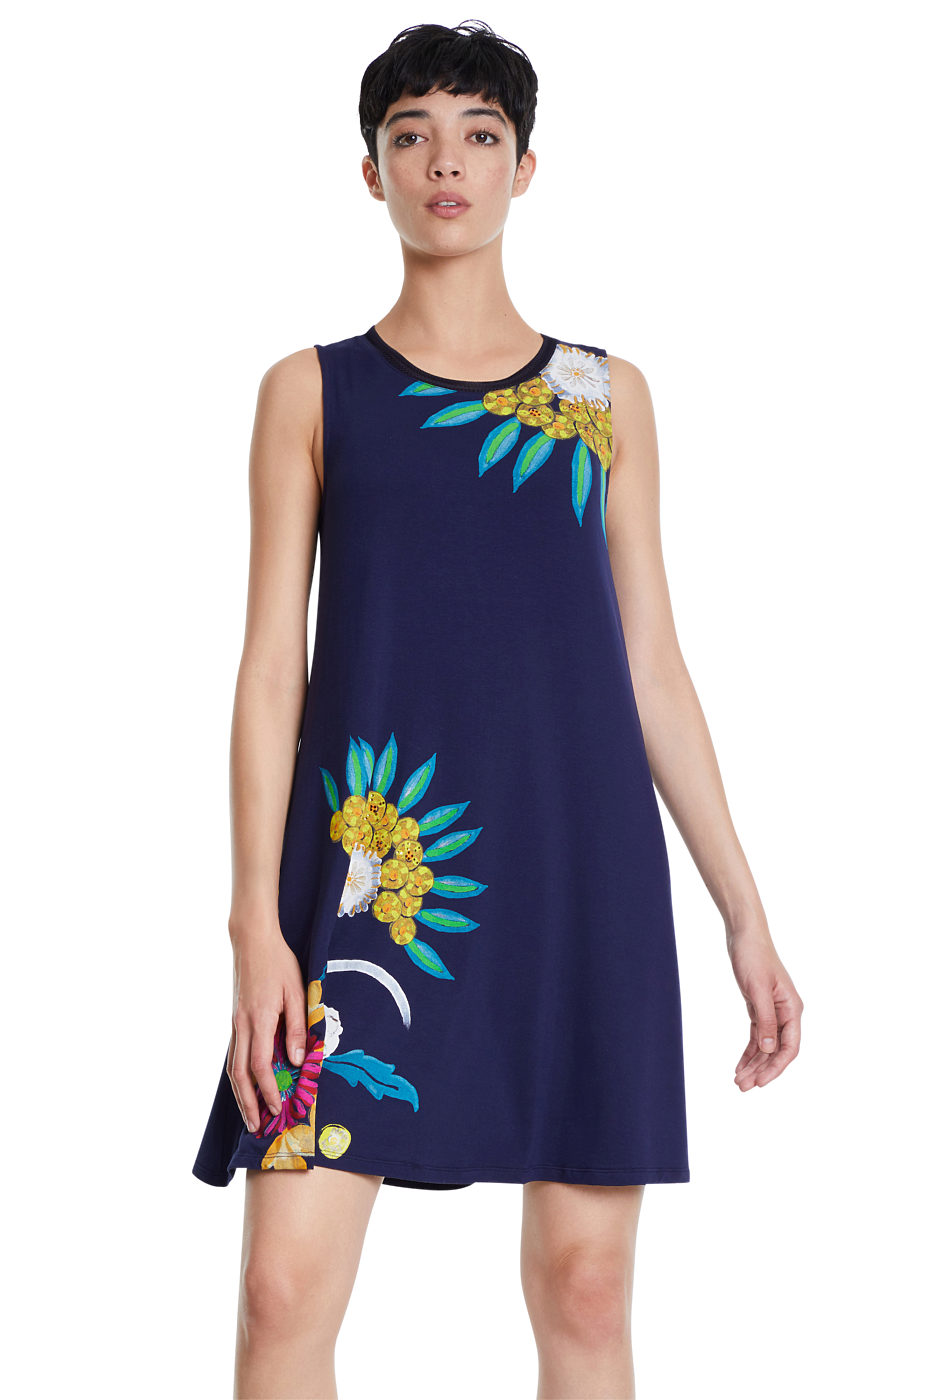 Learner Drastic necklace Tmavě modré šaty se vzorem květin Desigual Desigual | Blanka Straka